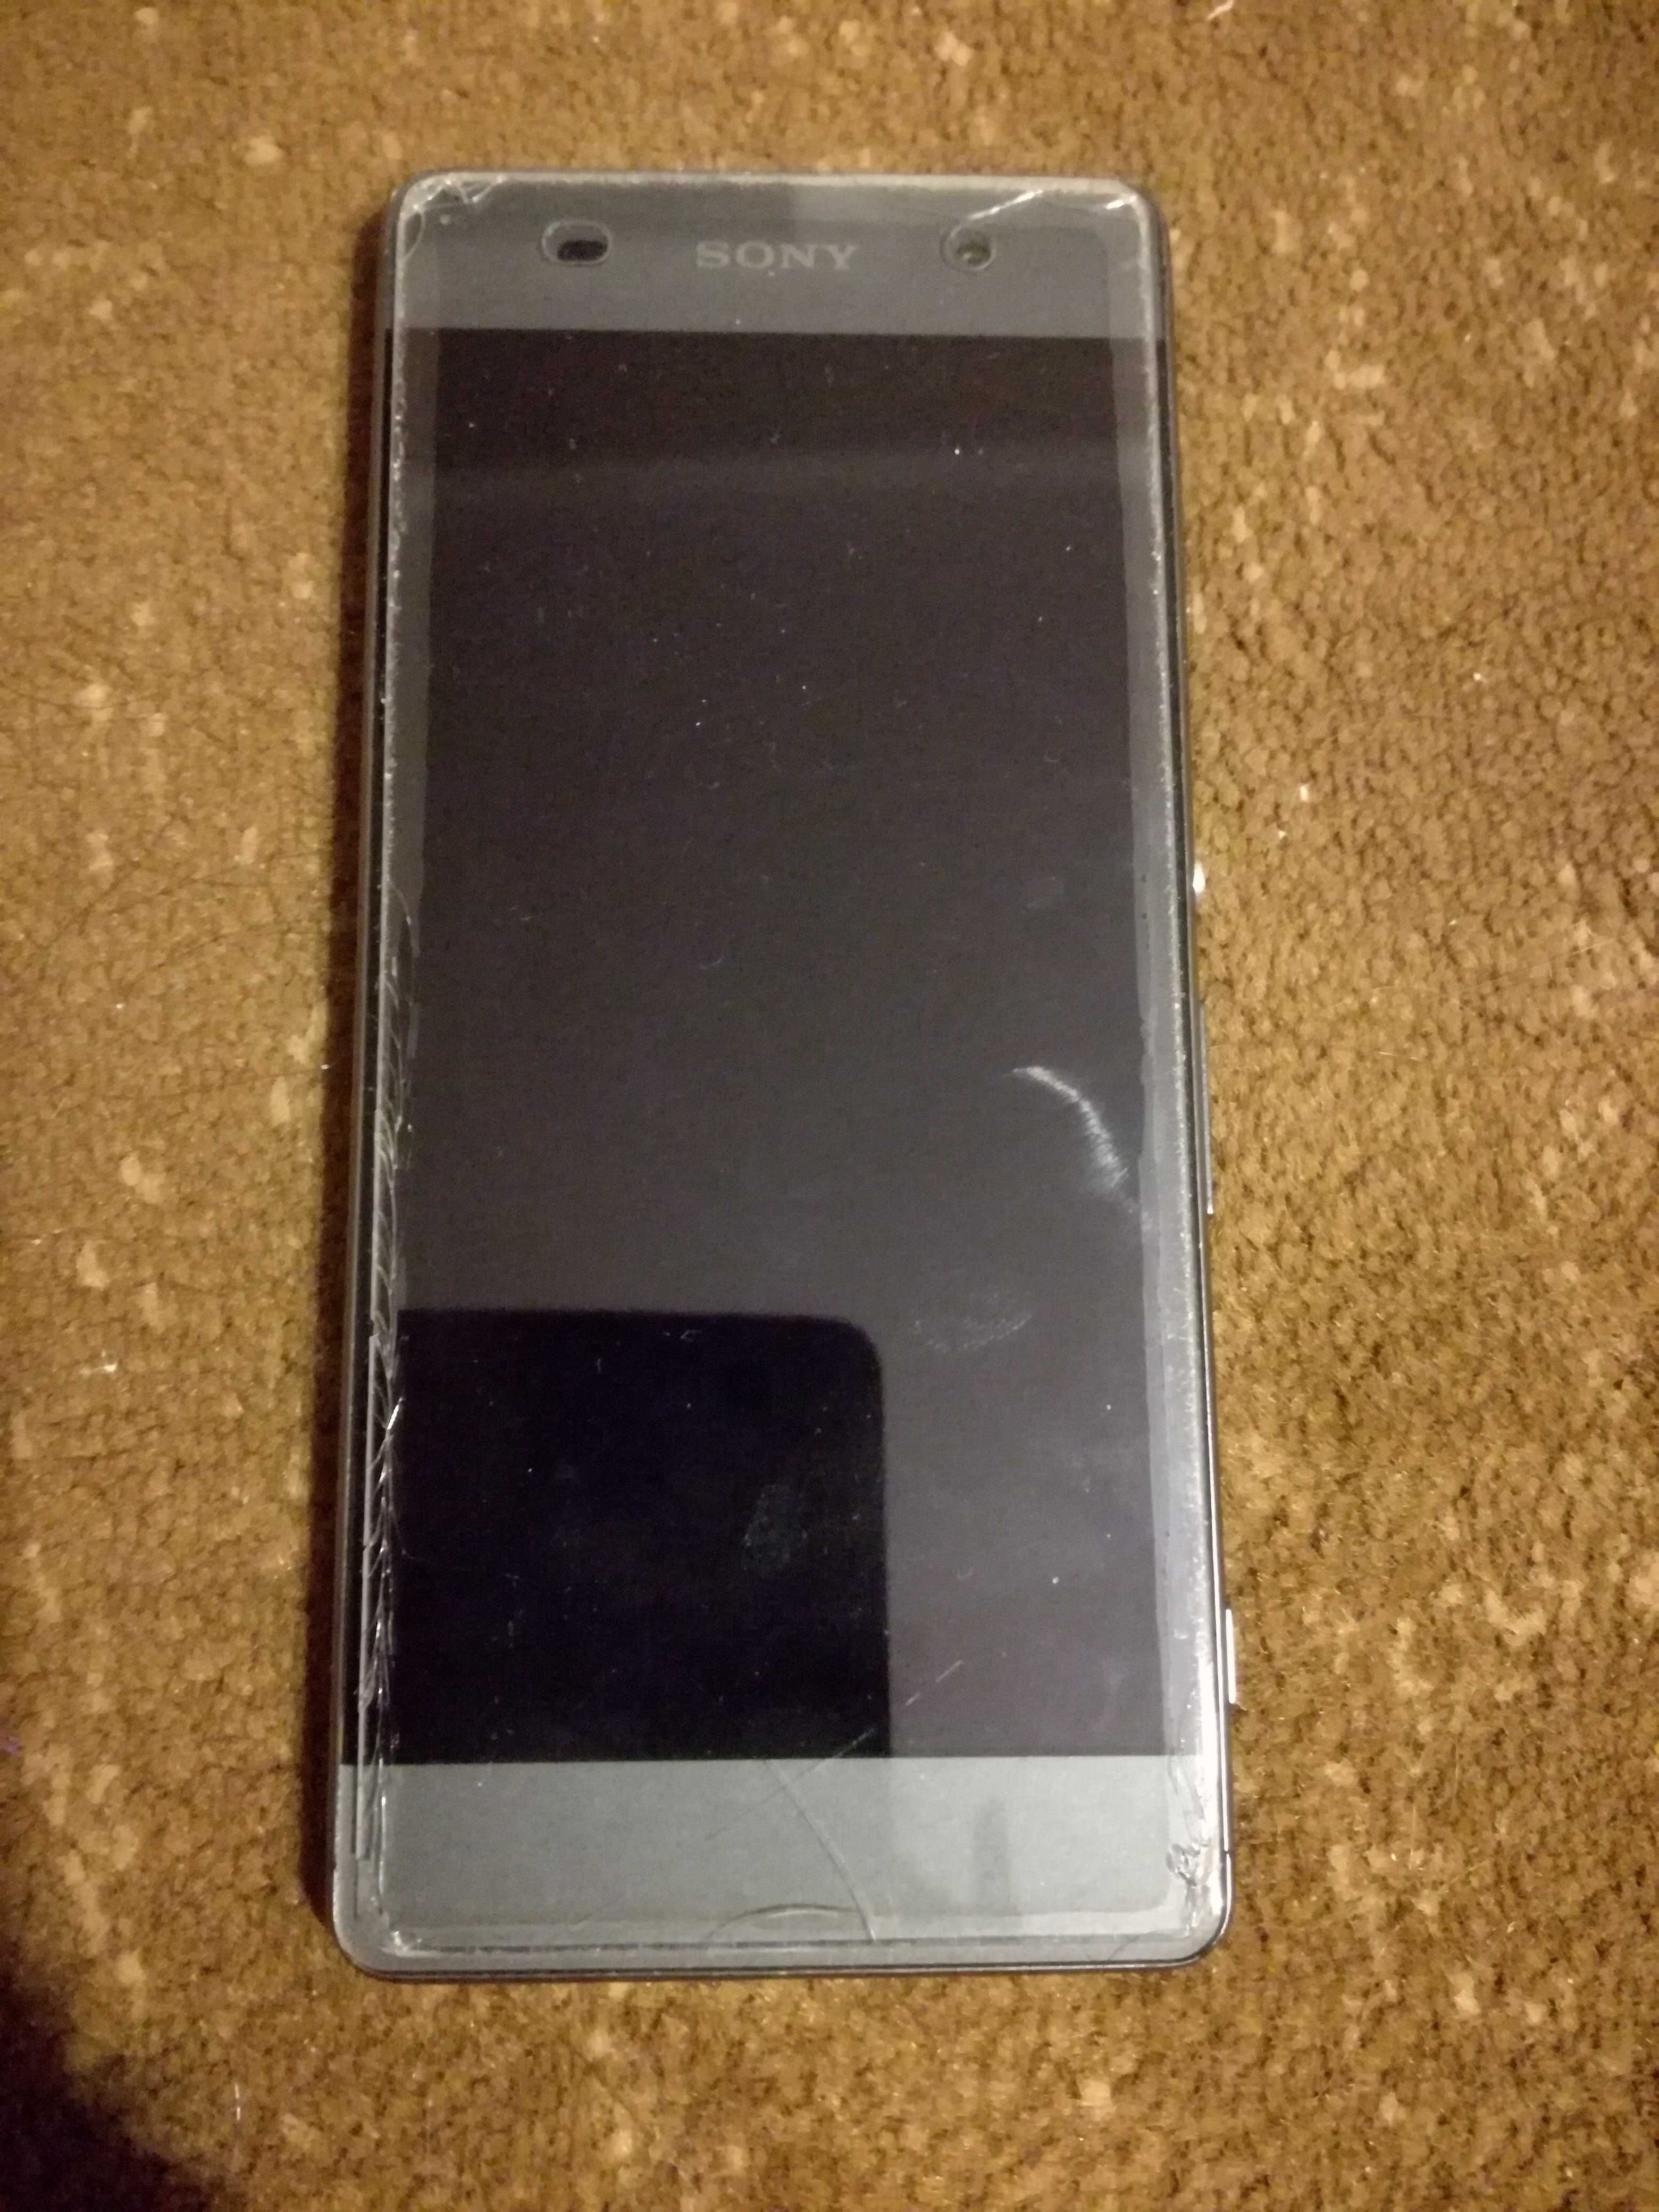 Smartfon Sony Xperia XA 2 GB / 16 GB